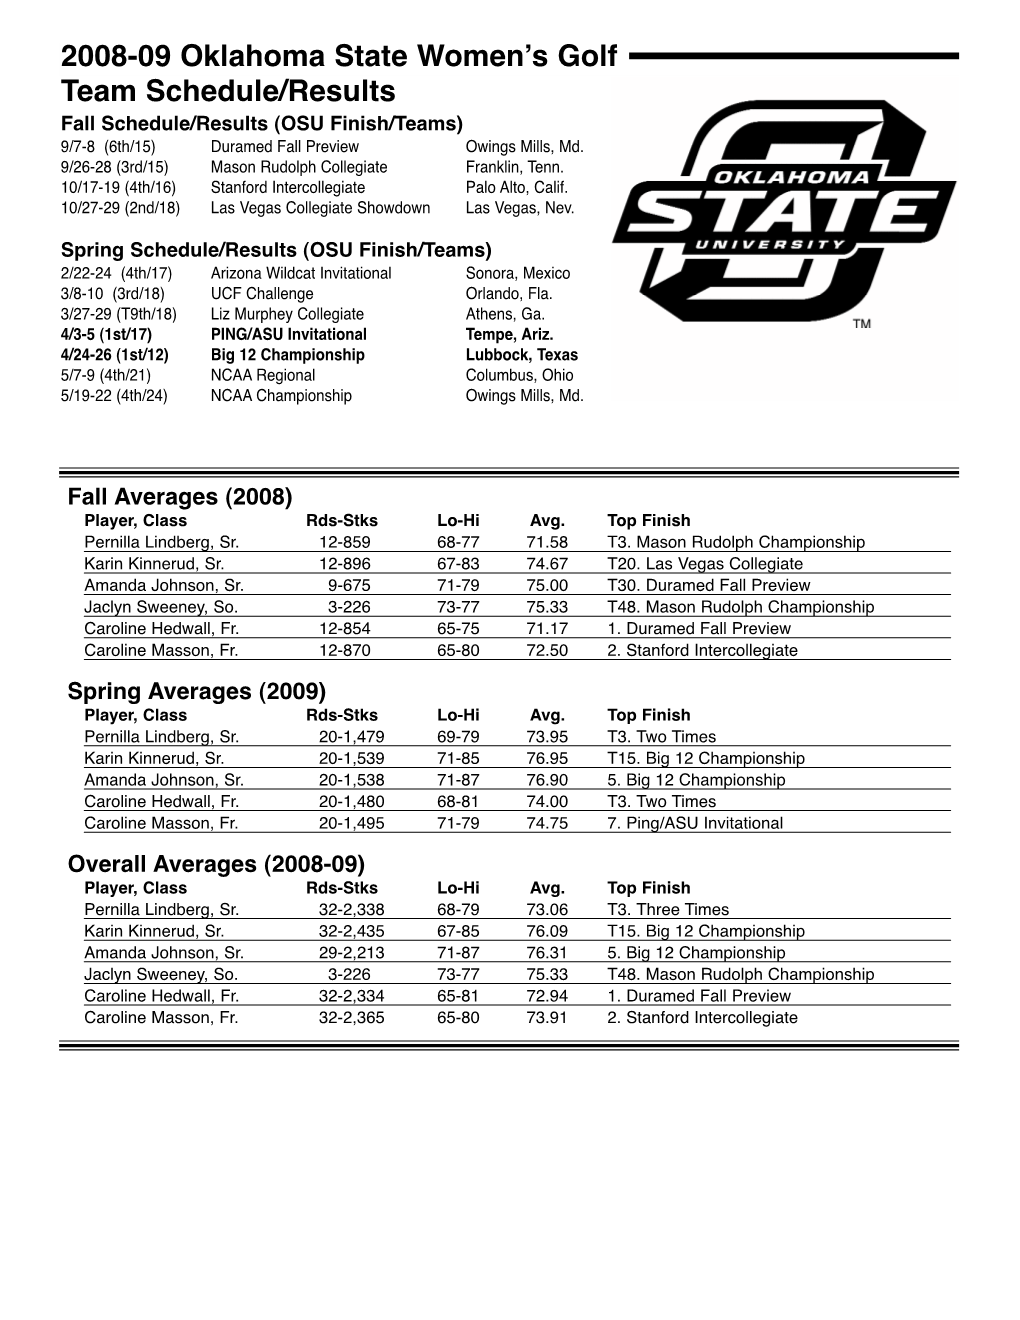 2008-09 Oklahoma State Women's Golf Team Schedule/Results